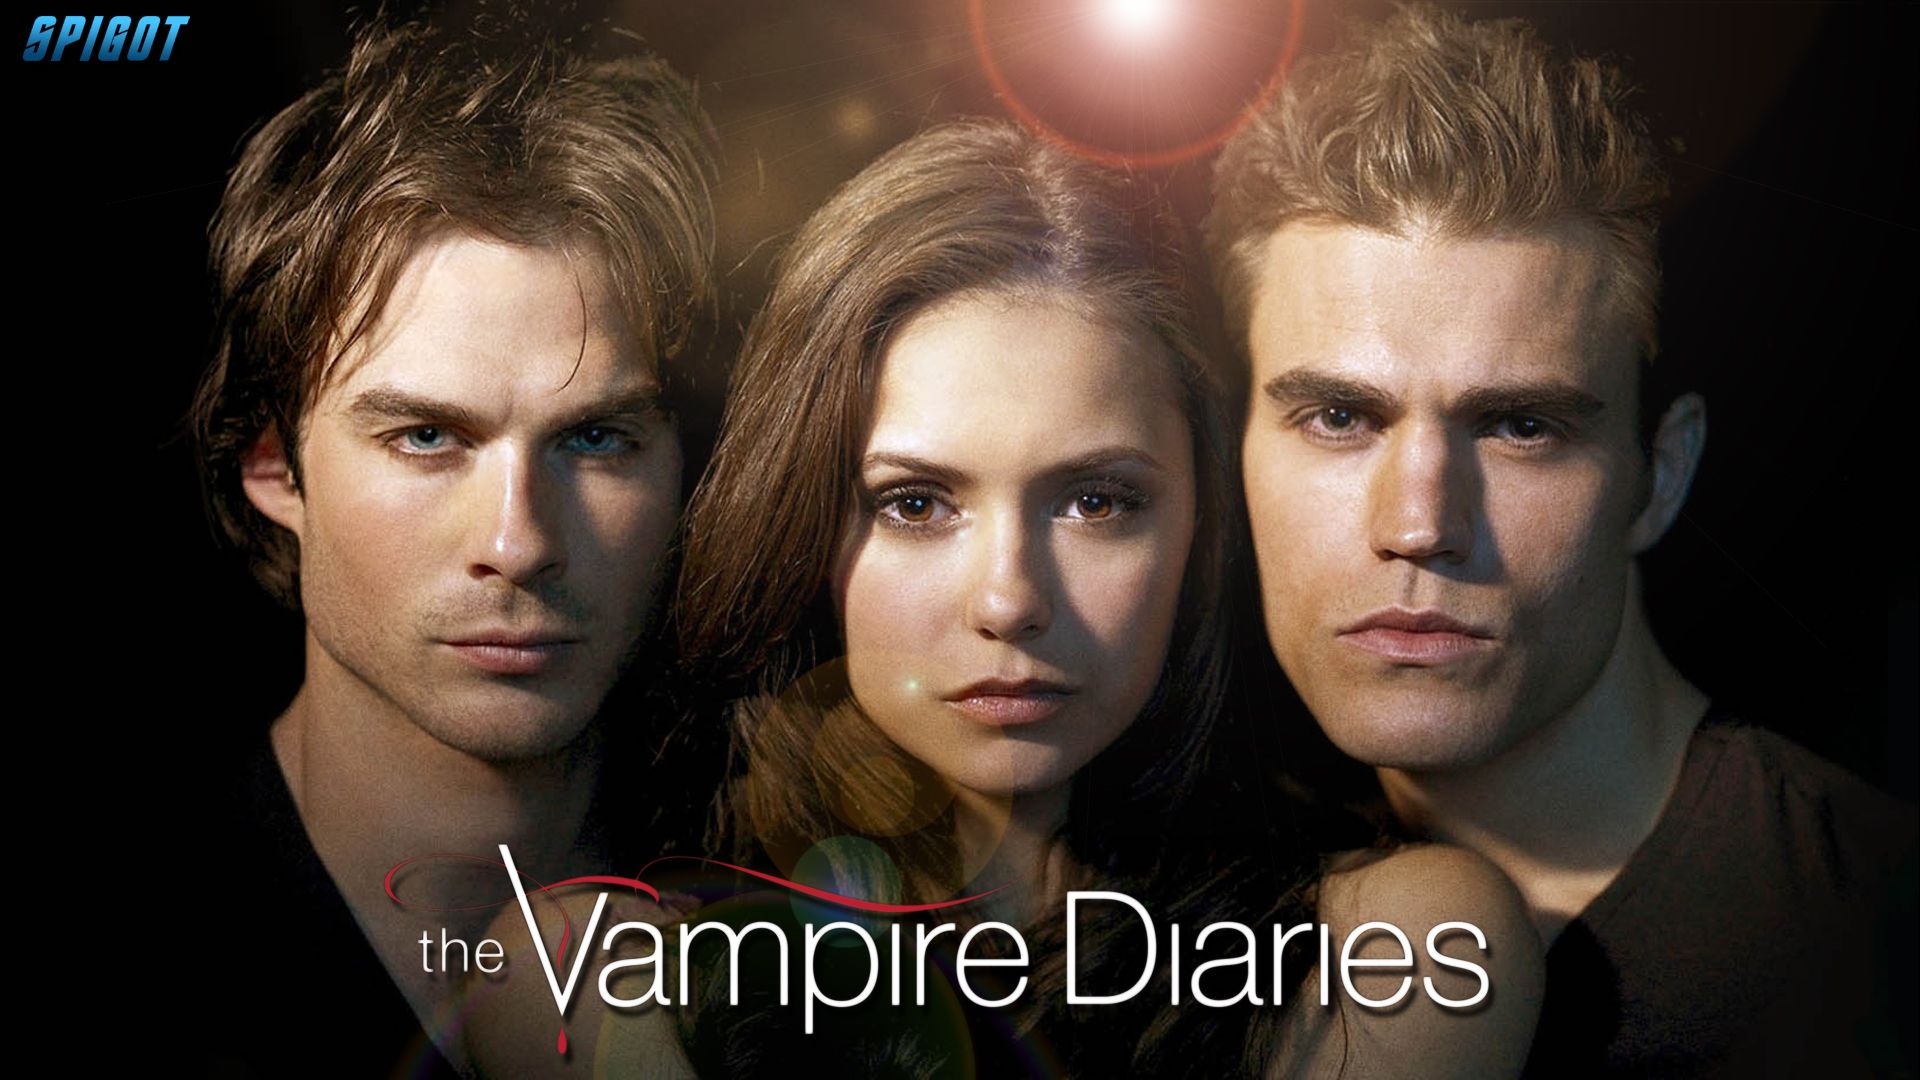 More Vampire Diaries Wallpapers | George Spigot's Blog